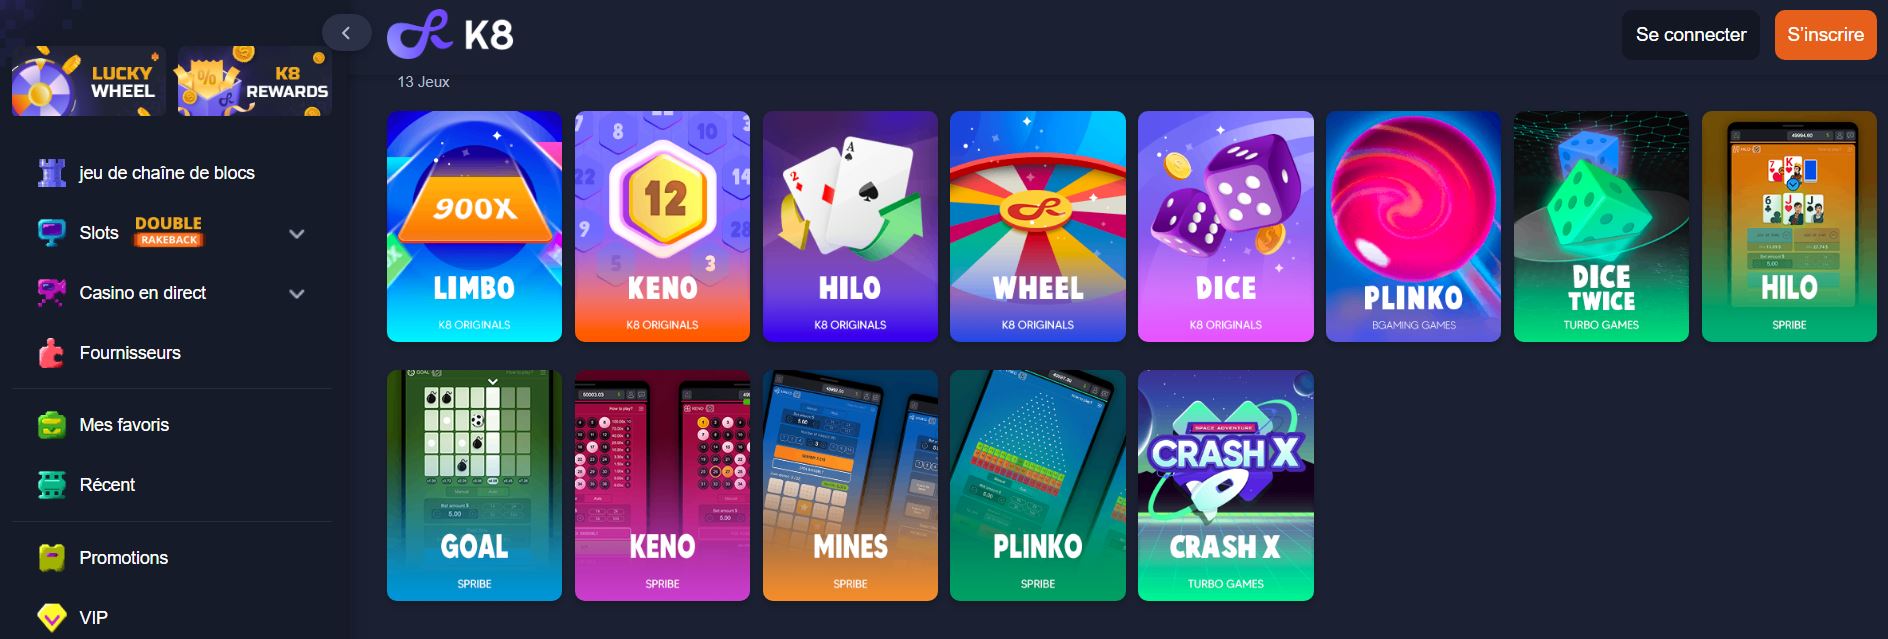 K8 Casino - Jeux blockchain - Crypto casino